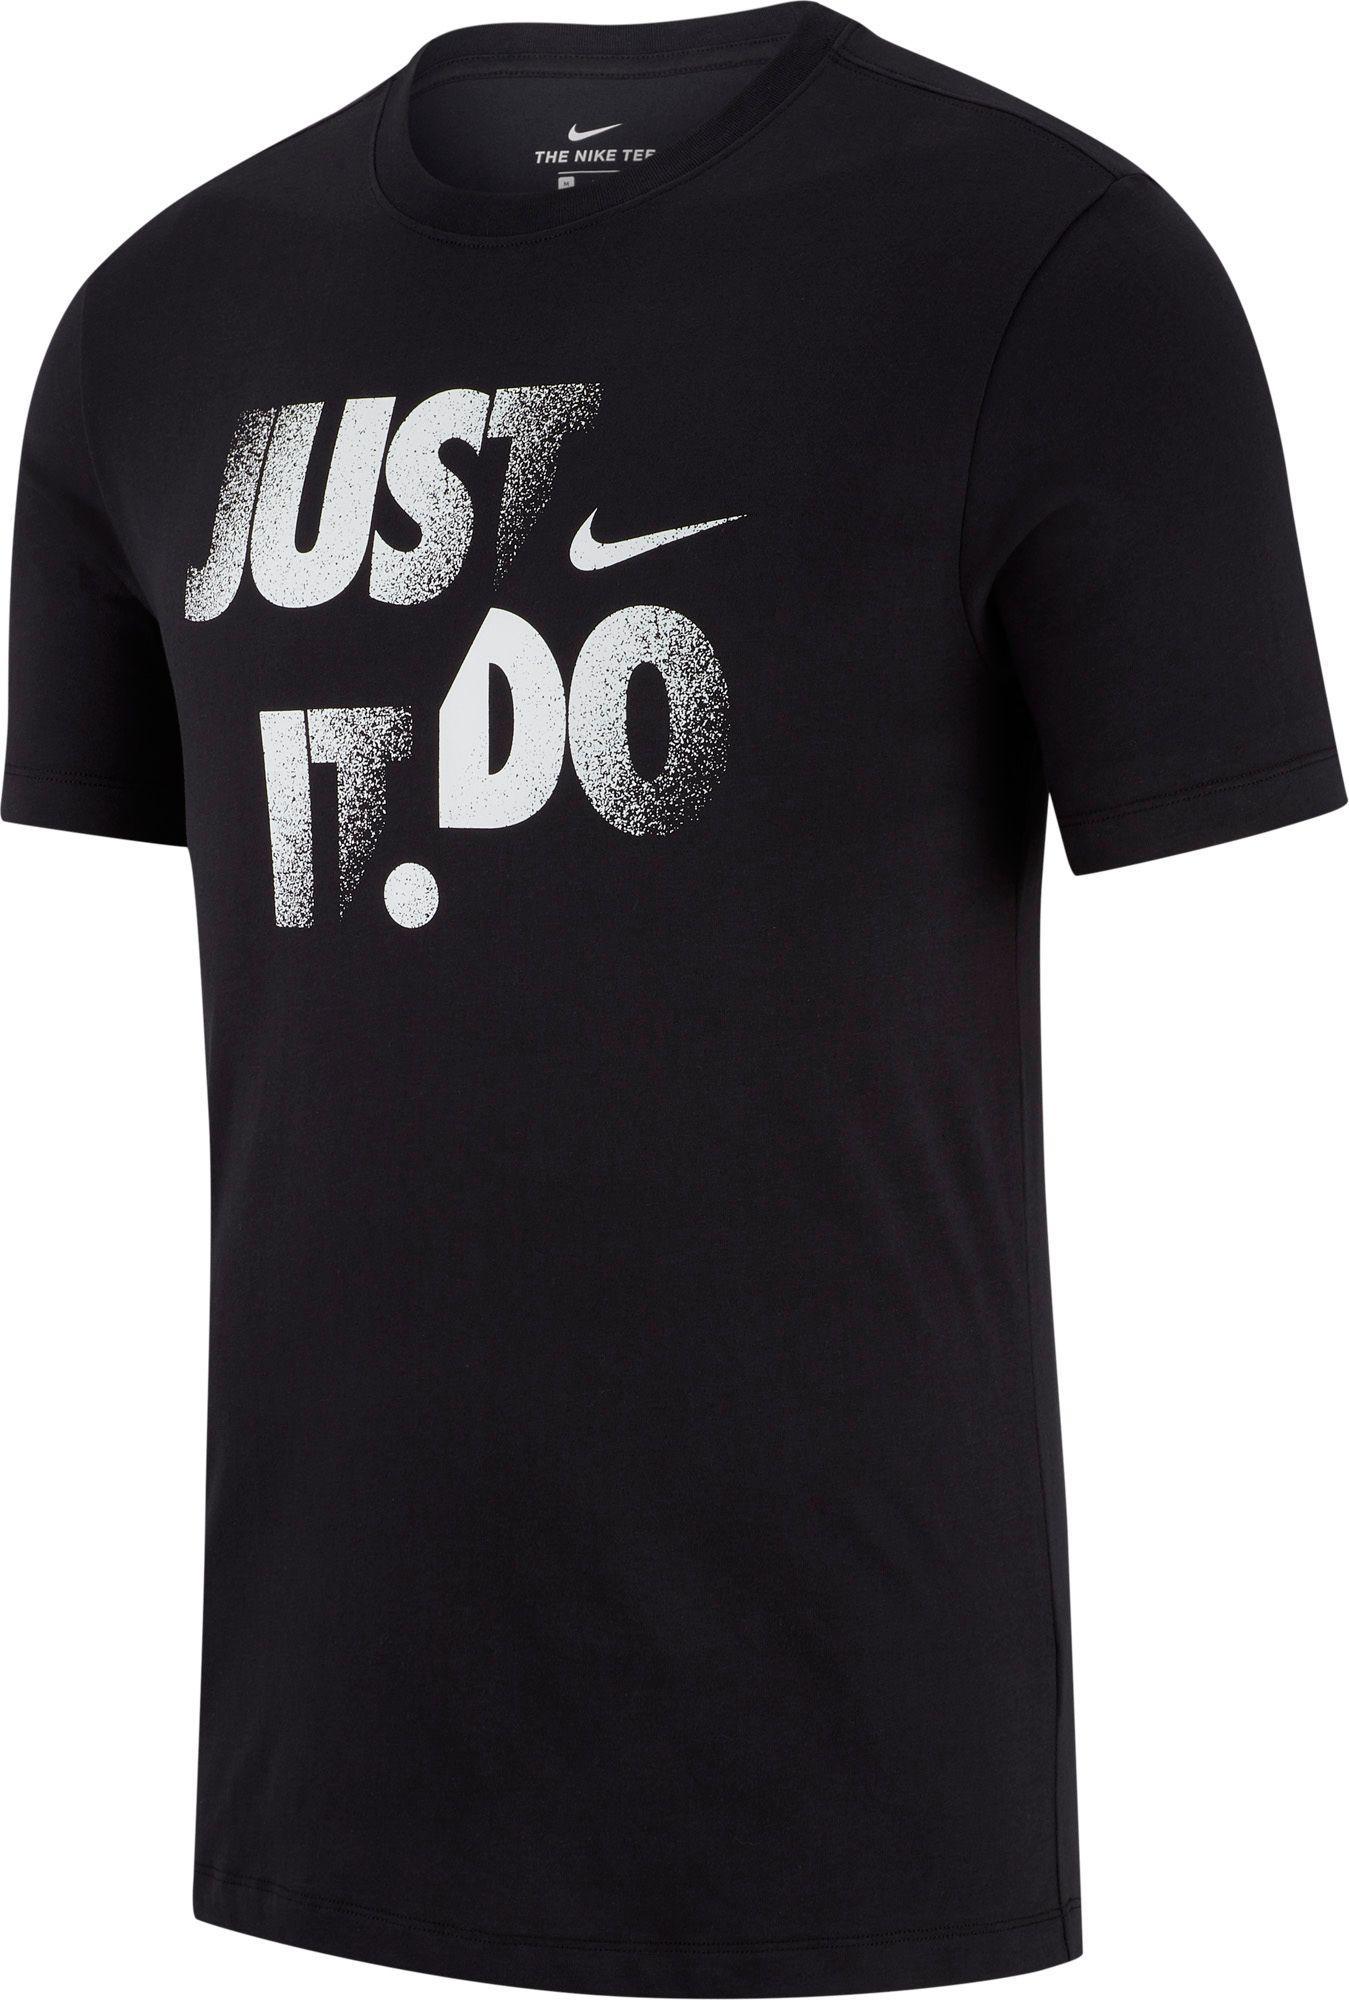 Nike Dri-fit Jdi Cotton T-shirt in Black/White (Black) for Men - Lyst